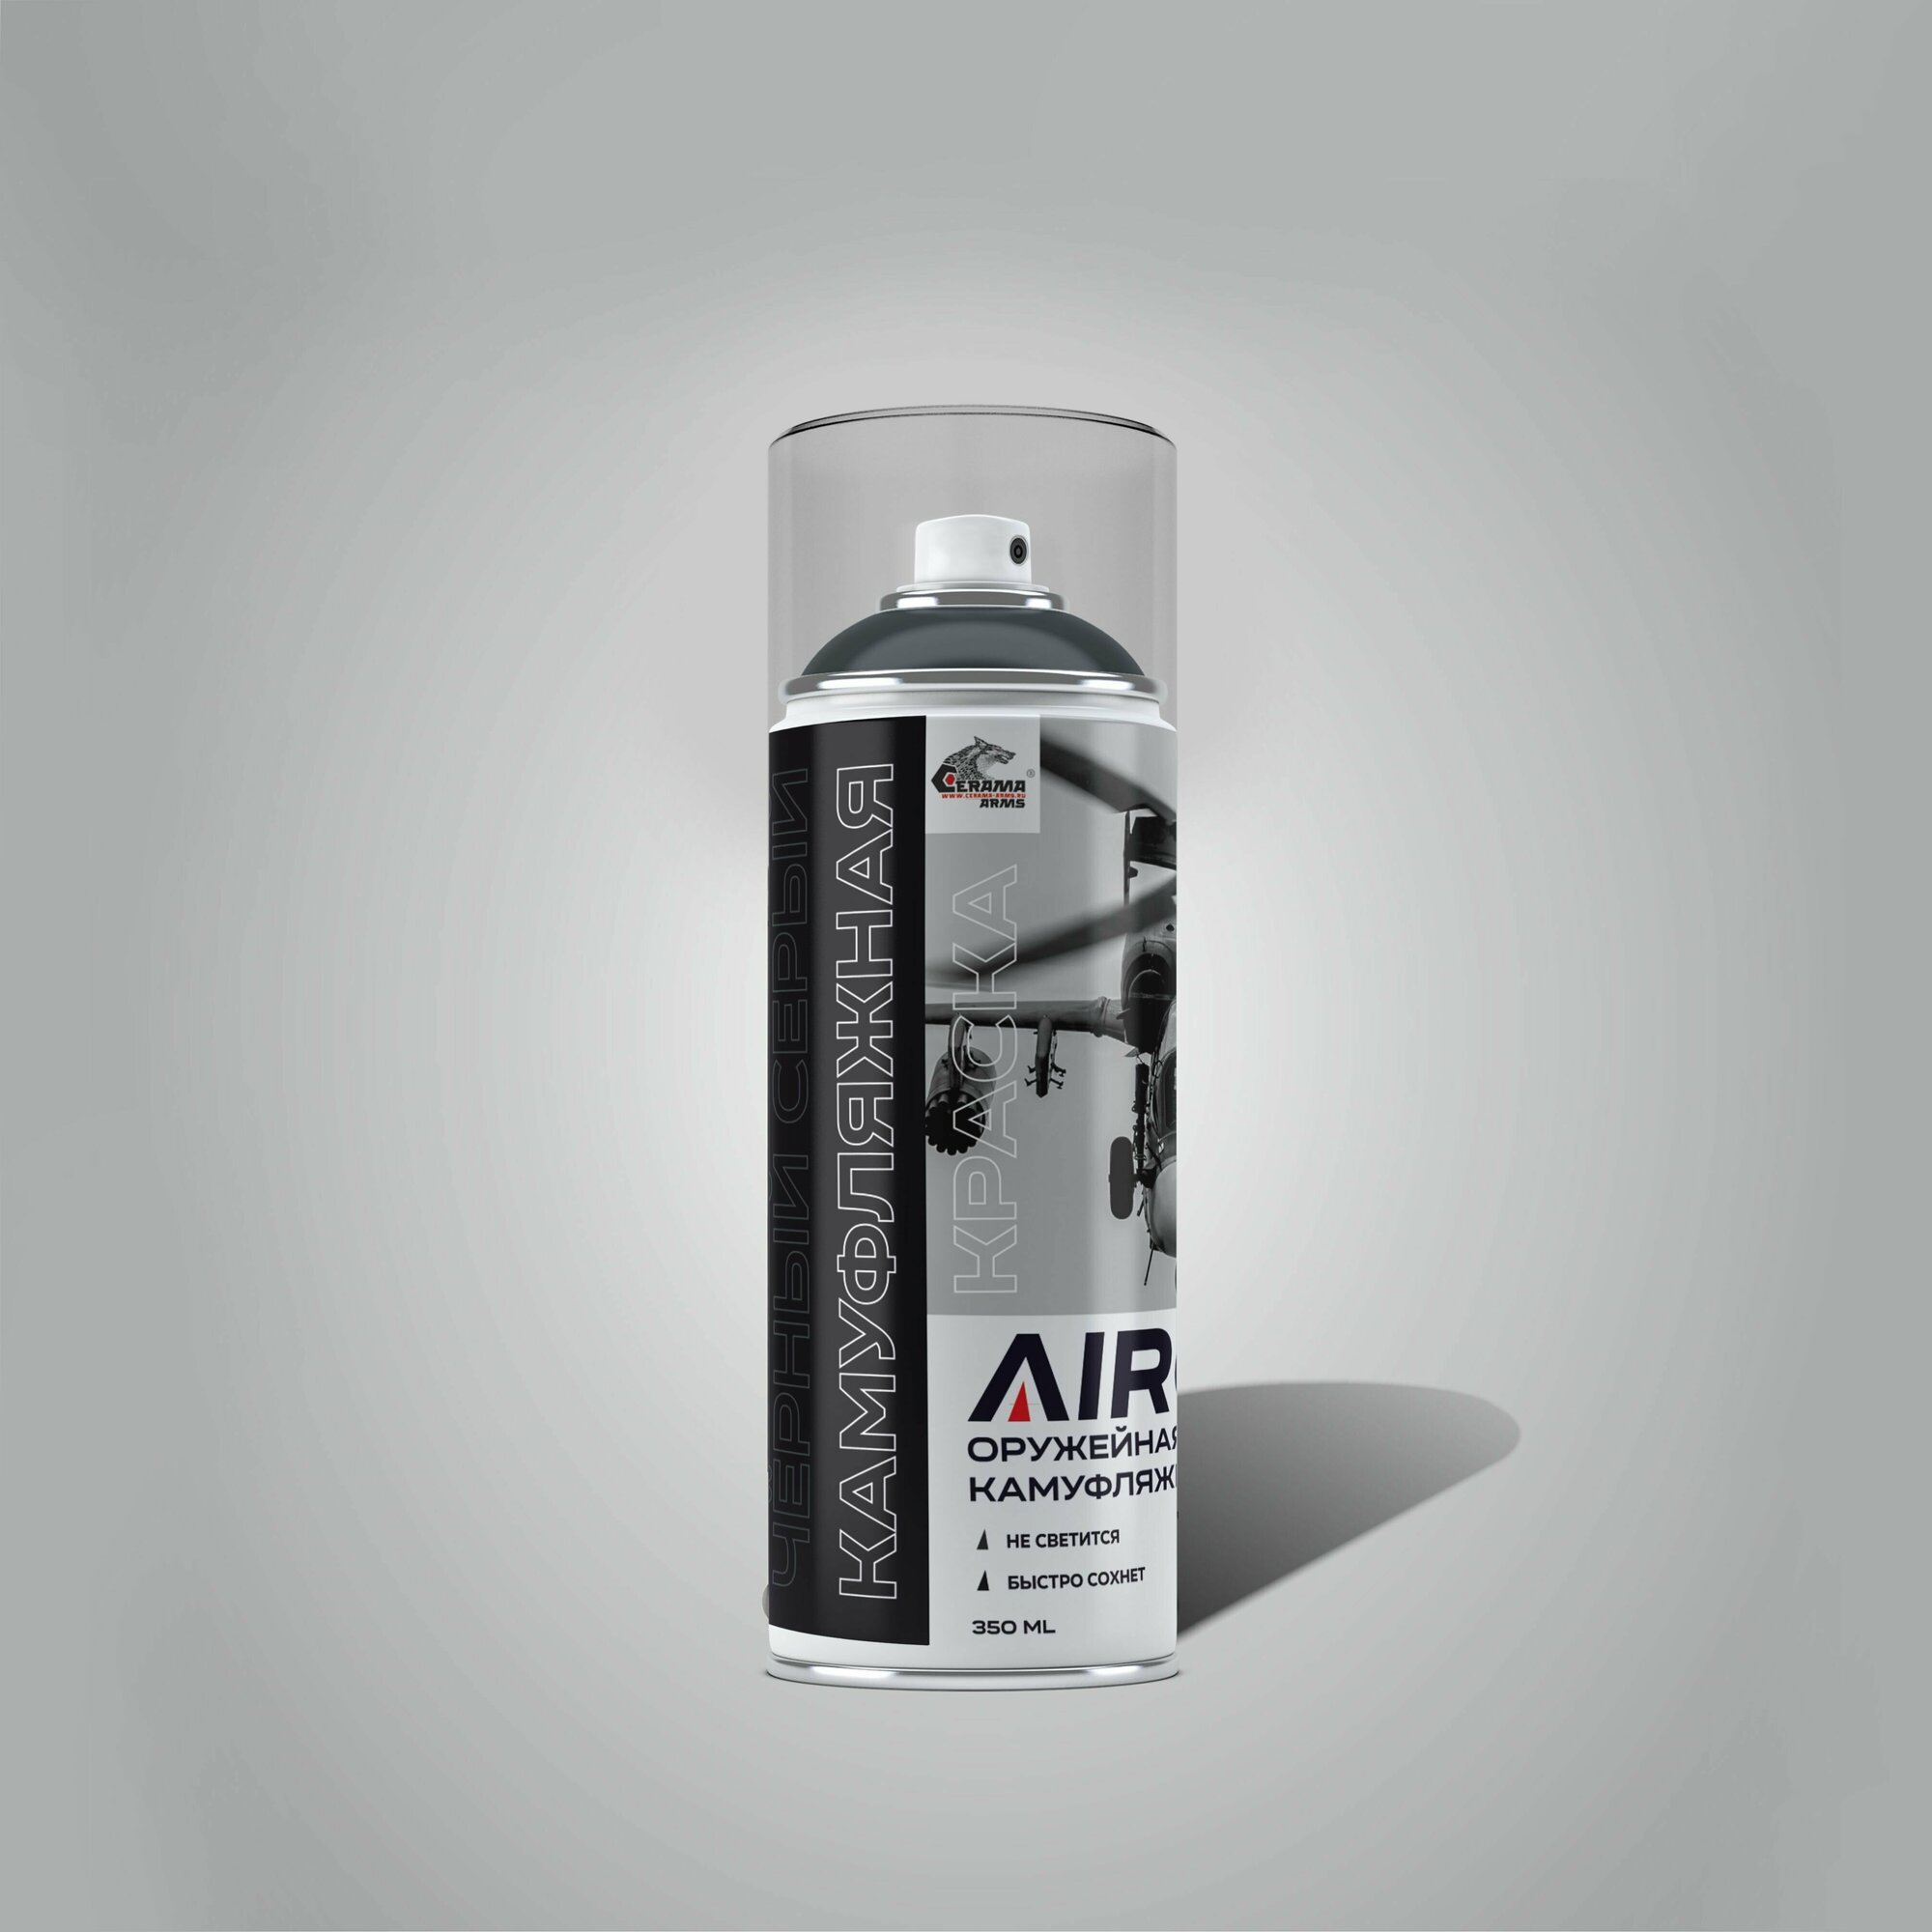 AIRO - PRO 7021 черный серый CERAMA-ARMS Оружейная аэрозольная камуфляжная краска обьем 350/250 Ral 7021 цвет: BLACK GREY